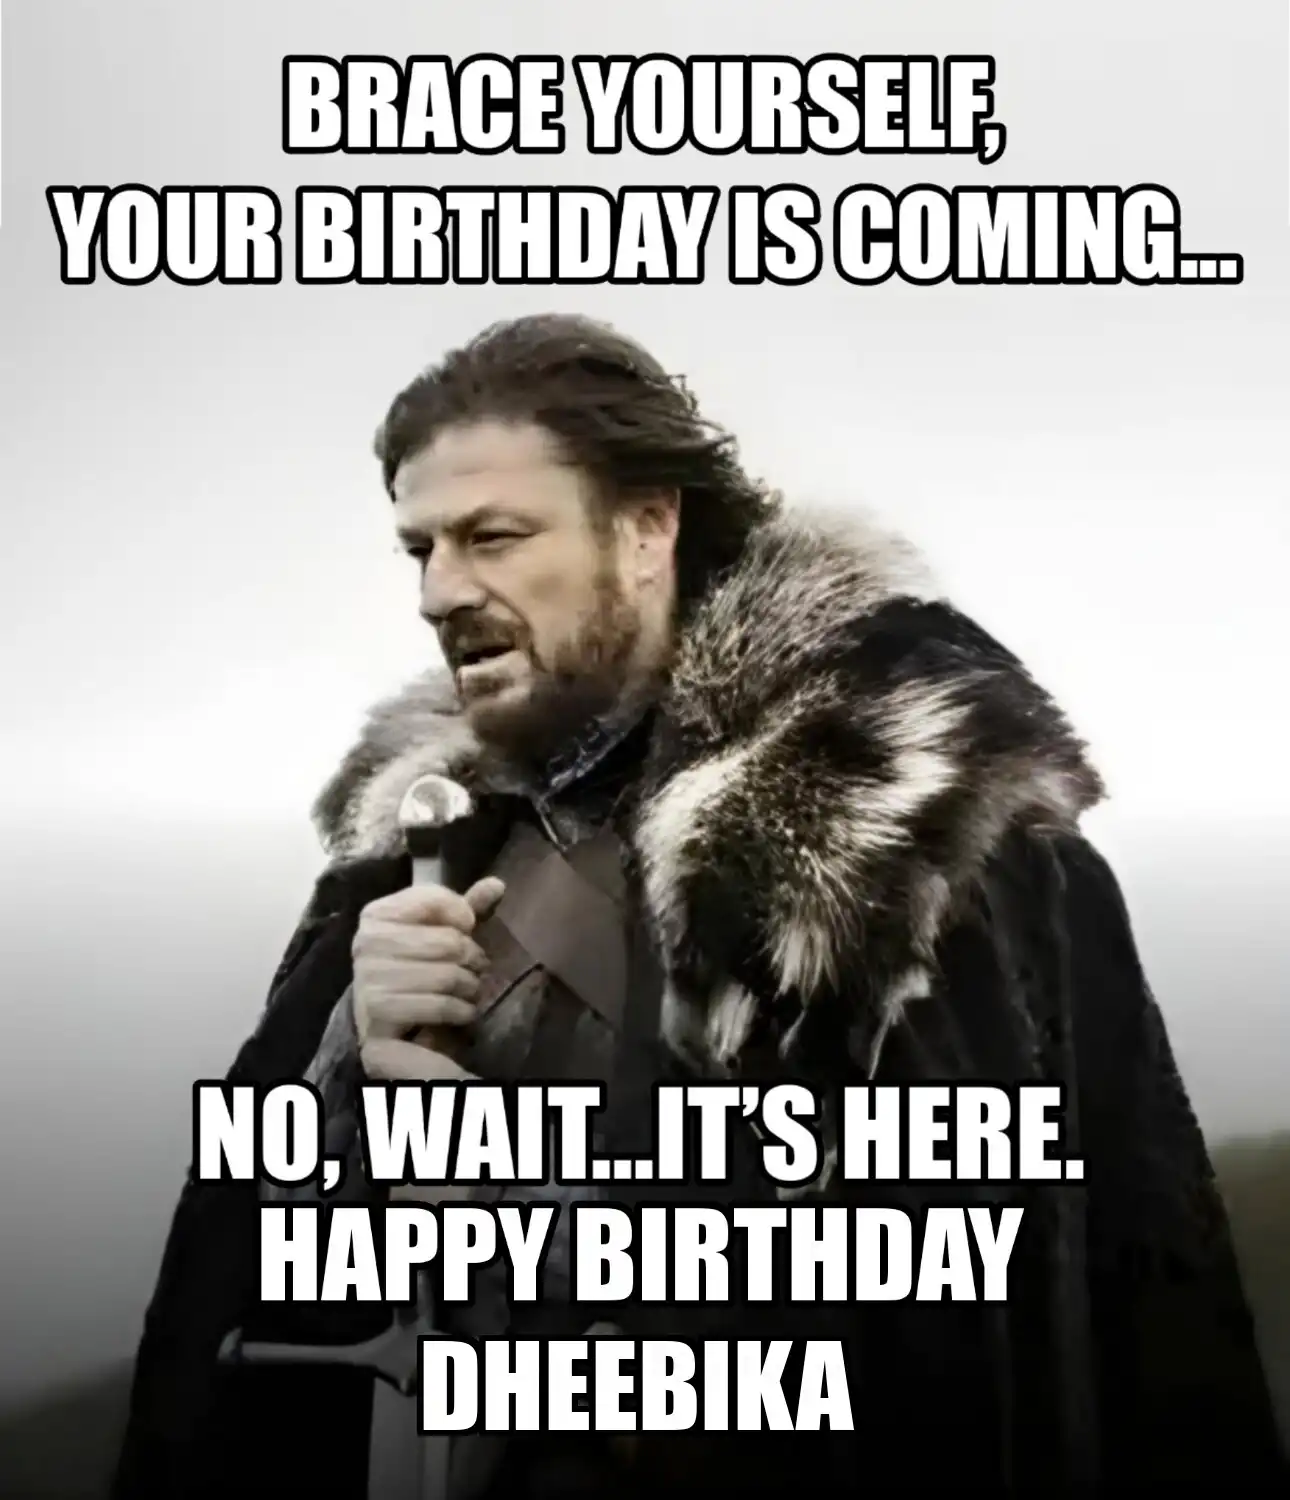 Happy Birthday Dheebika Brace Yourself Your Birthday Is Coming Meme